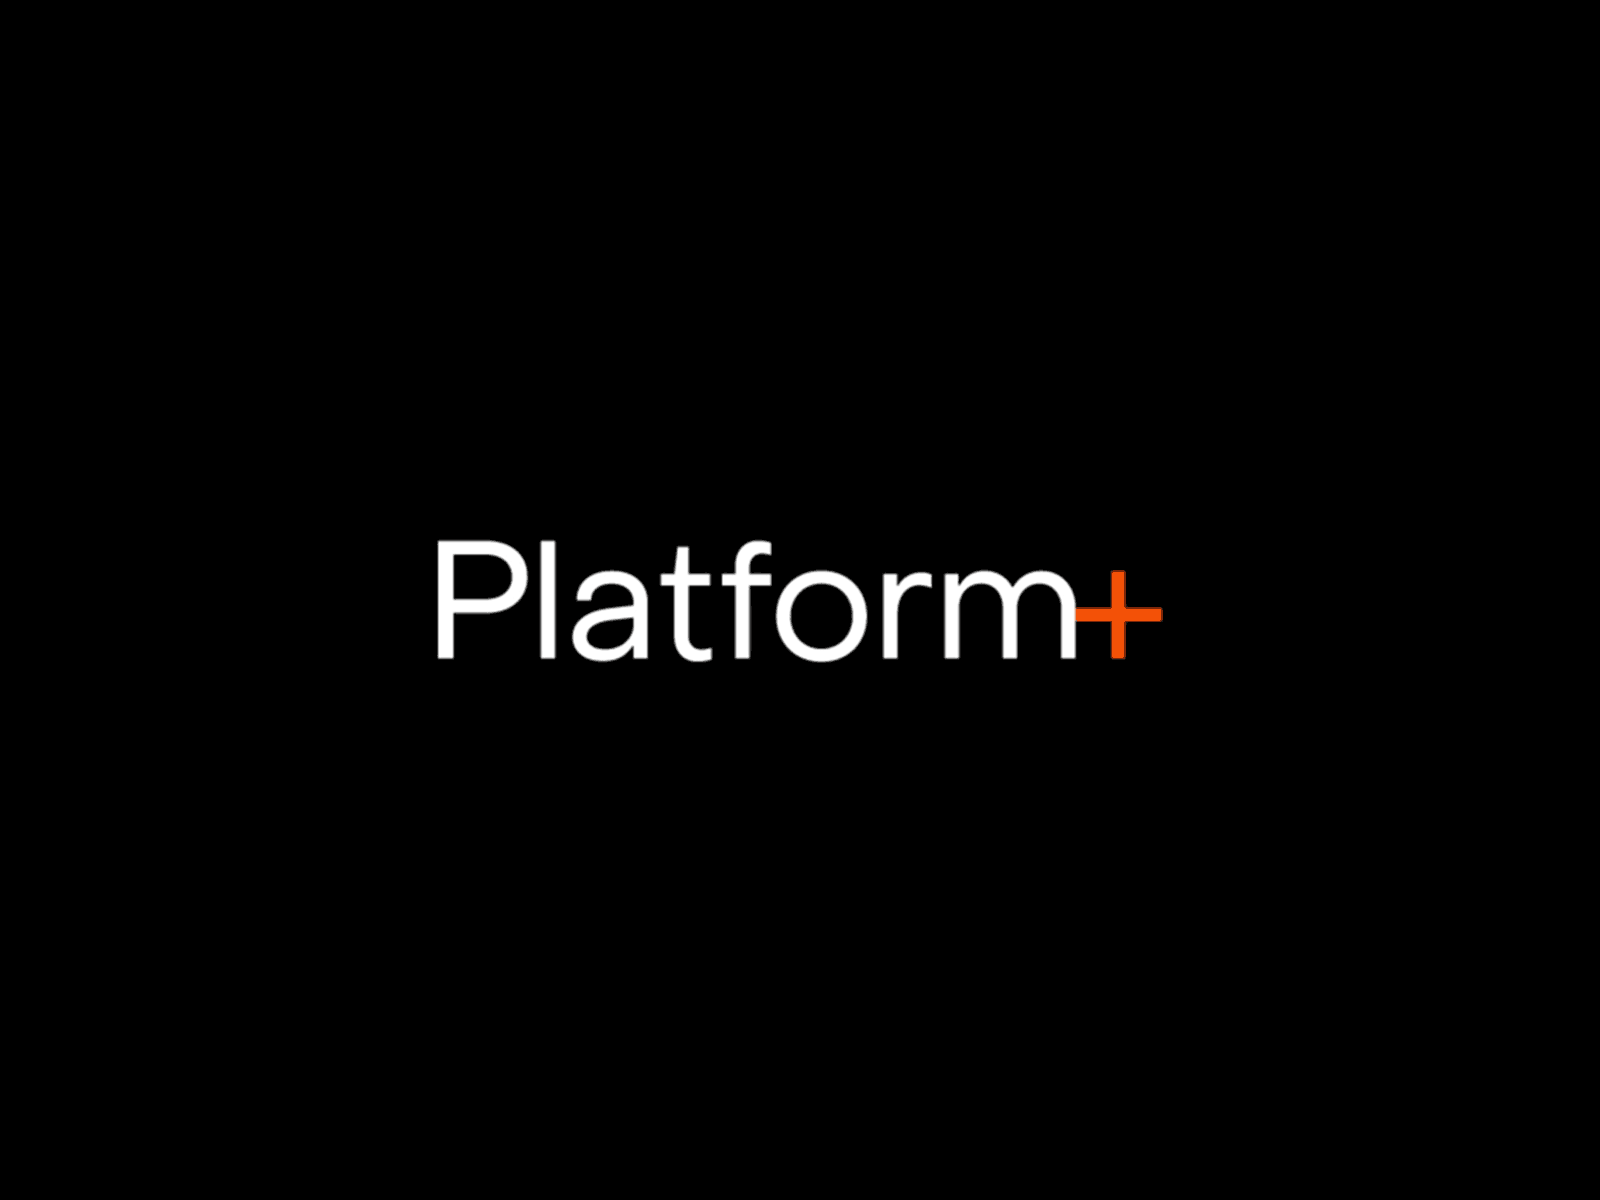 Platform+ Logo Animation